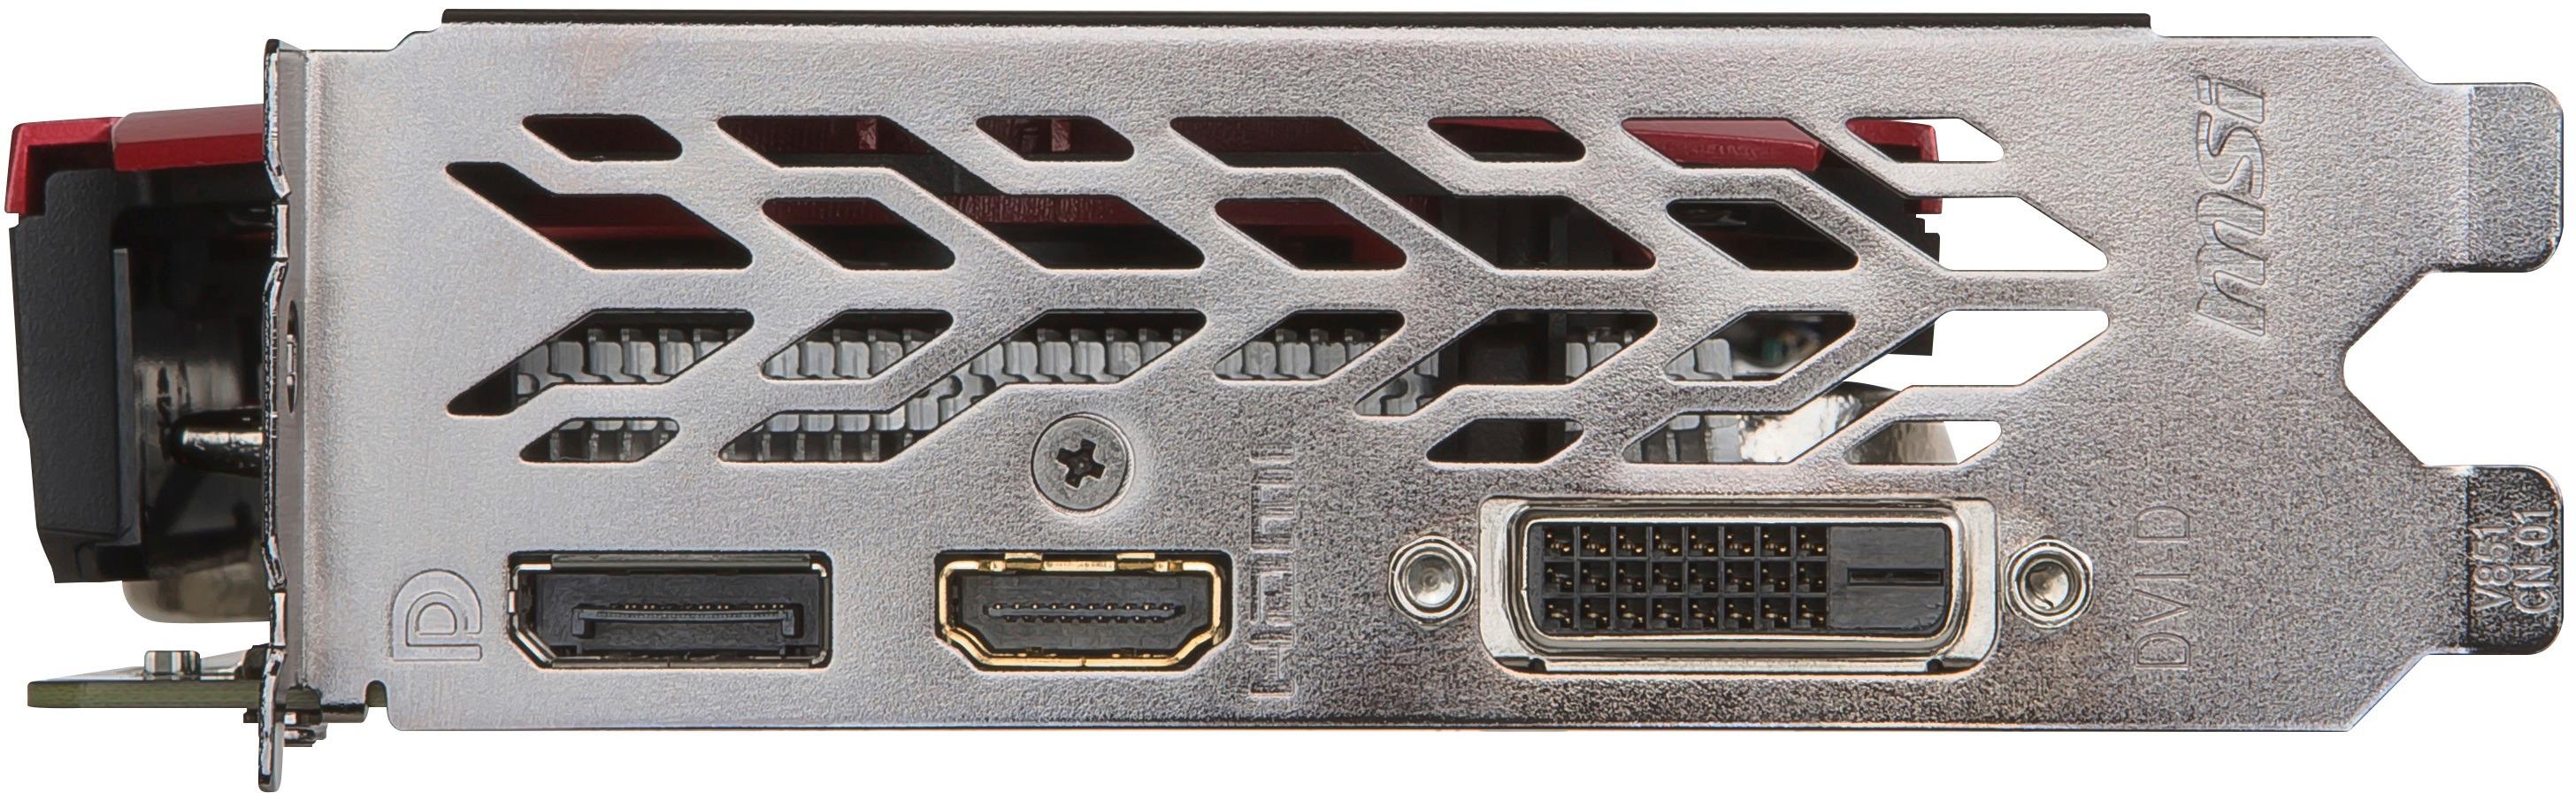 Msi Nvidia Geforce Gtx 1050 Ti Gaming X Bv 4gb Gddr5 Pci Express 3 0 Graphics Card Black Red Geforce Gtx 1050 Ti Gaming X B Best Buy